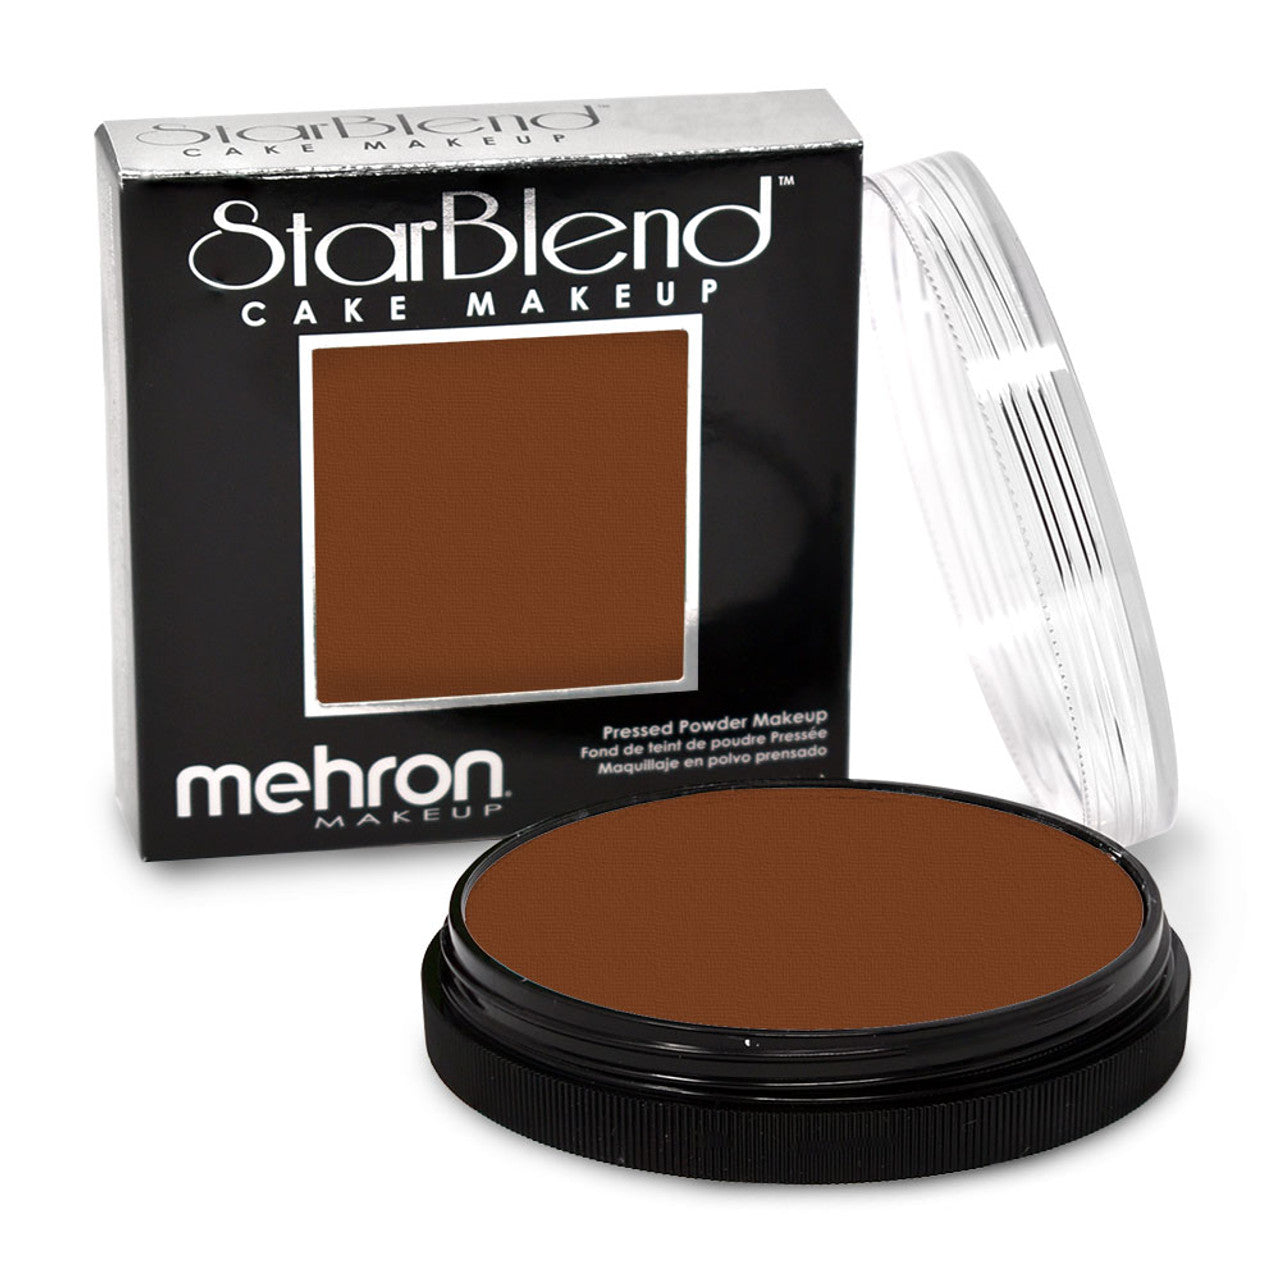 Mehron StarBlend Cake Makeup - Medium Ebony